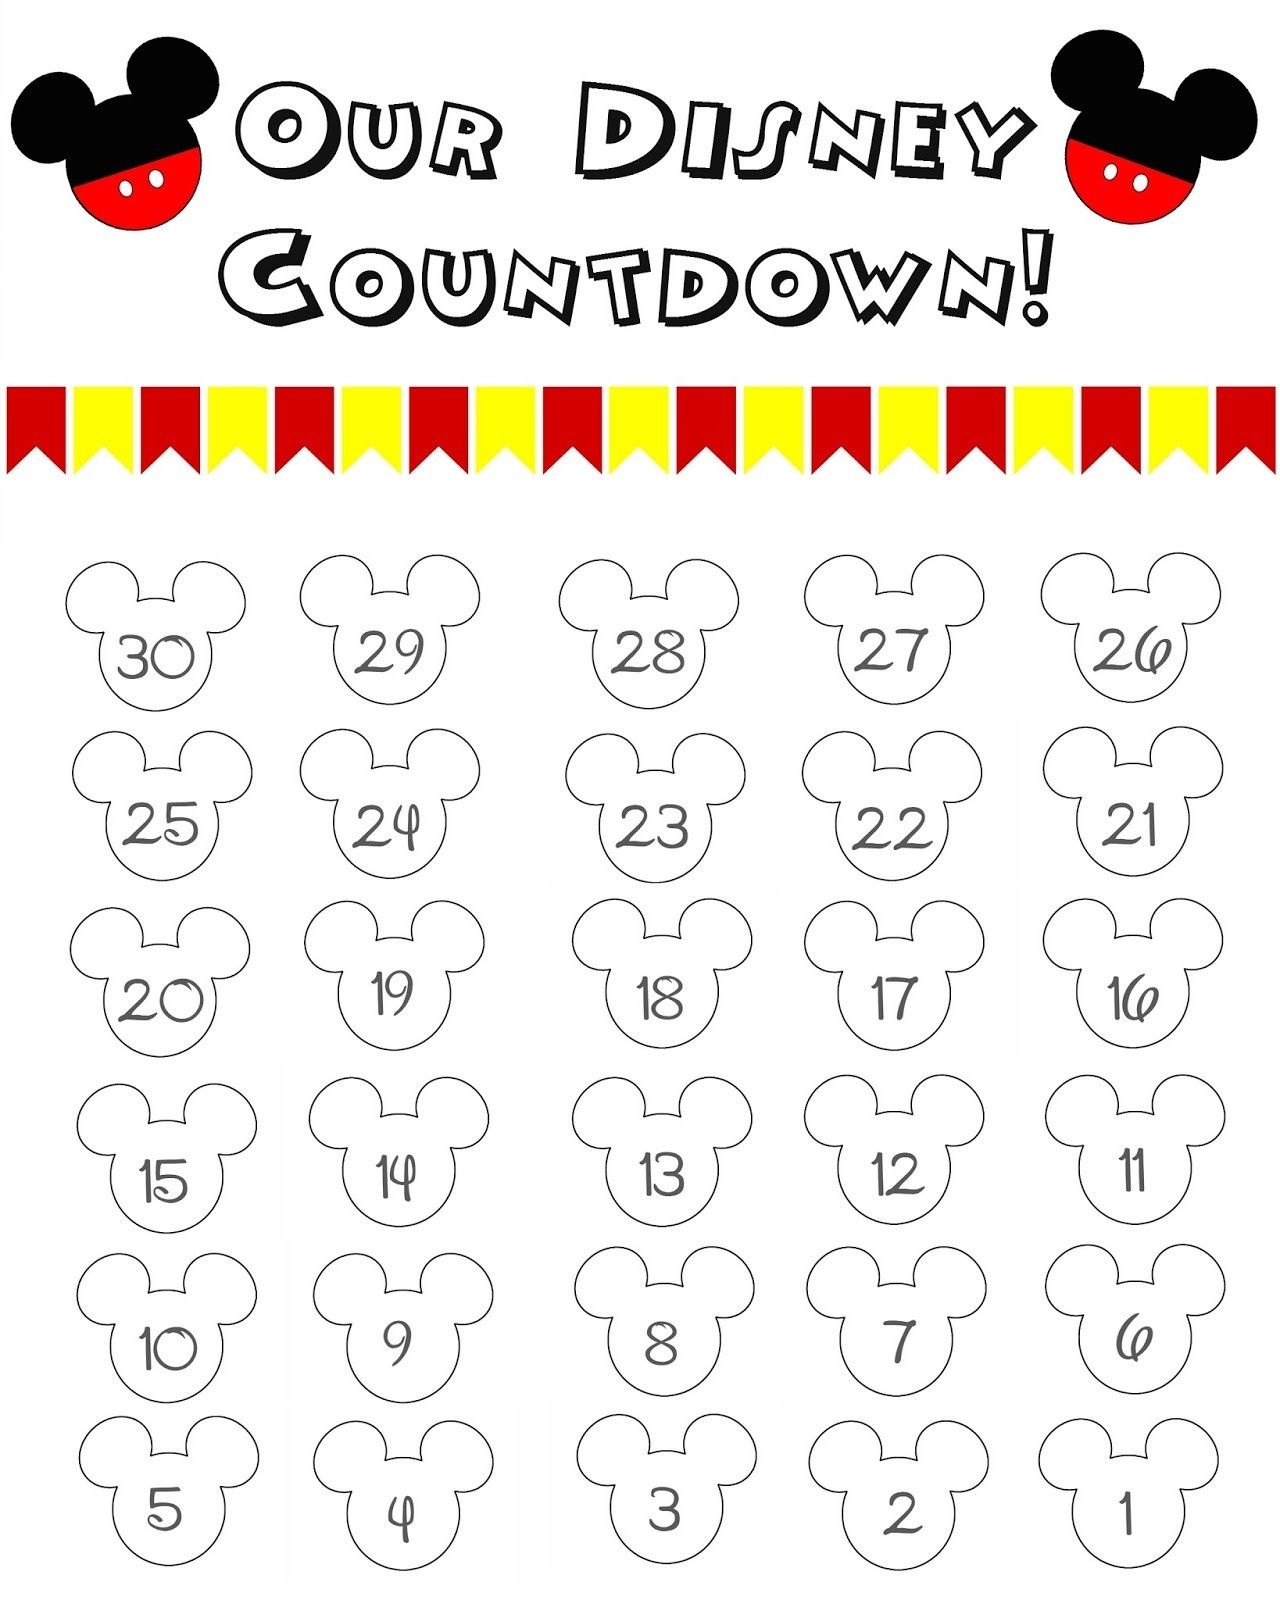 Awesome Countdown Calendars Printable | Free Printable